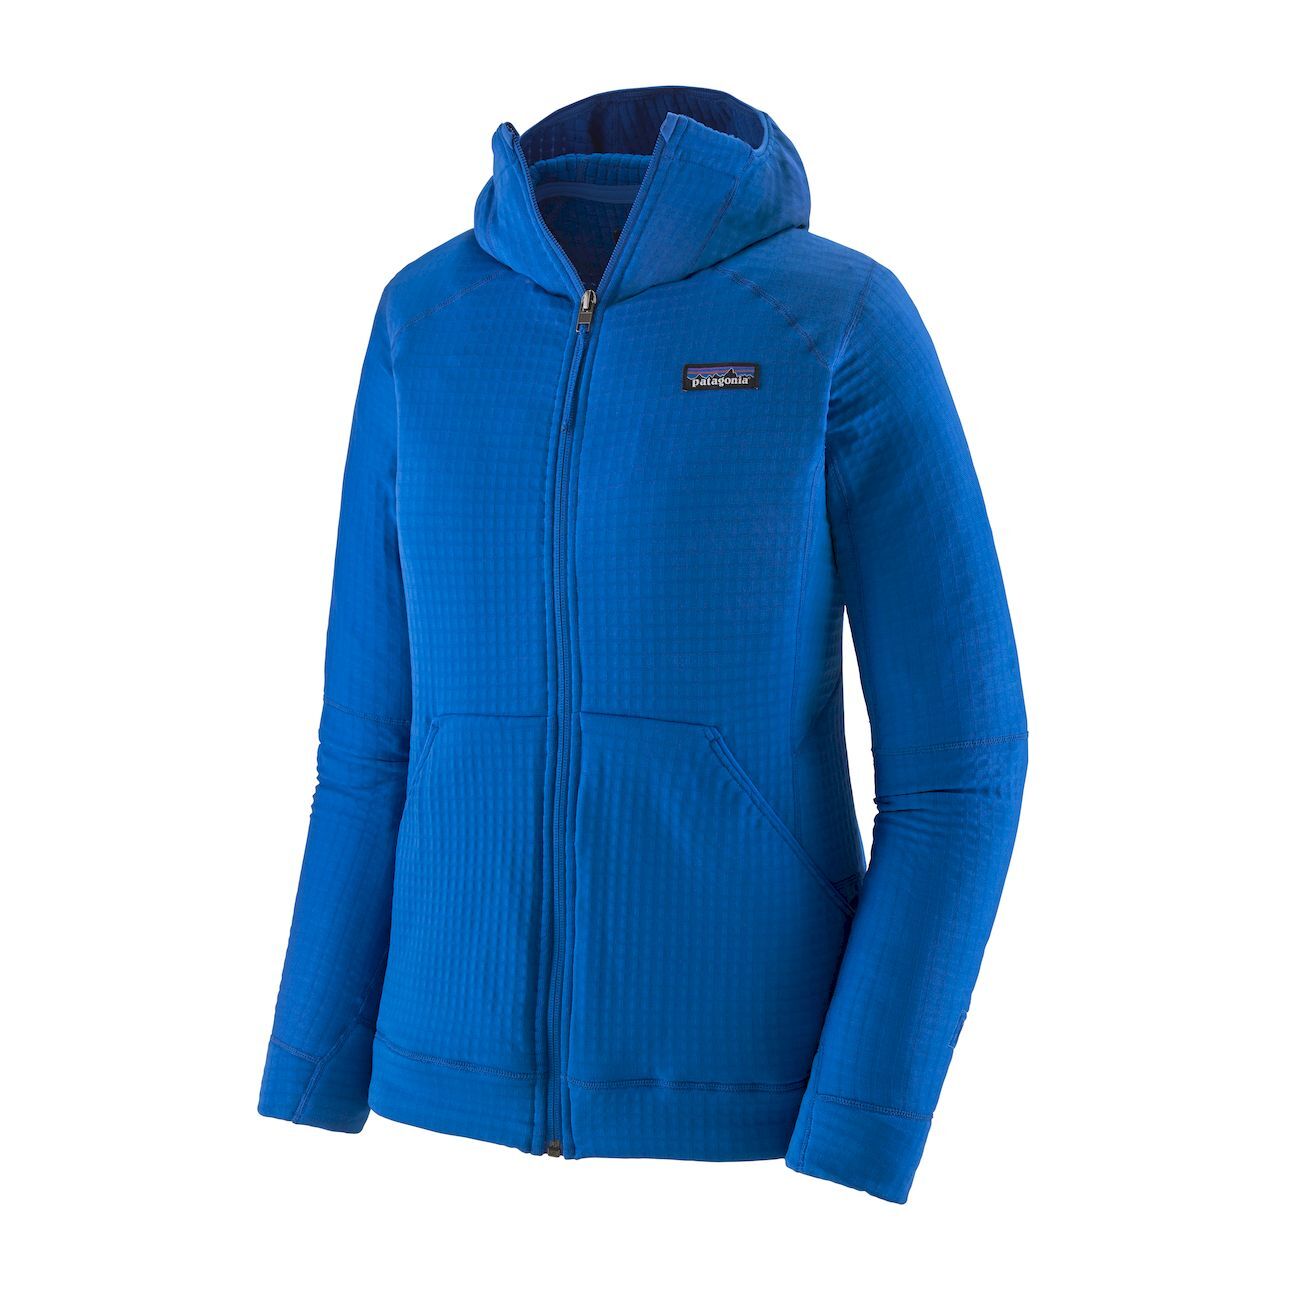 Patagonia R1 Full-Zip Hoody - Fleece jacket - Women's